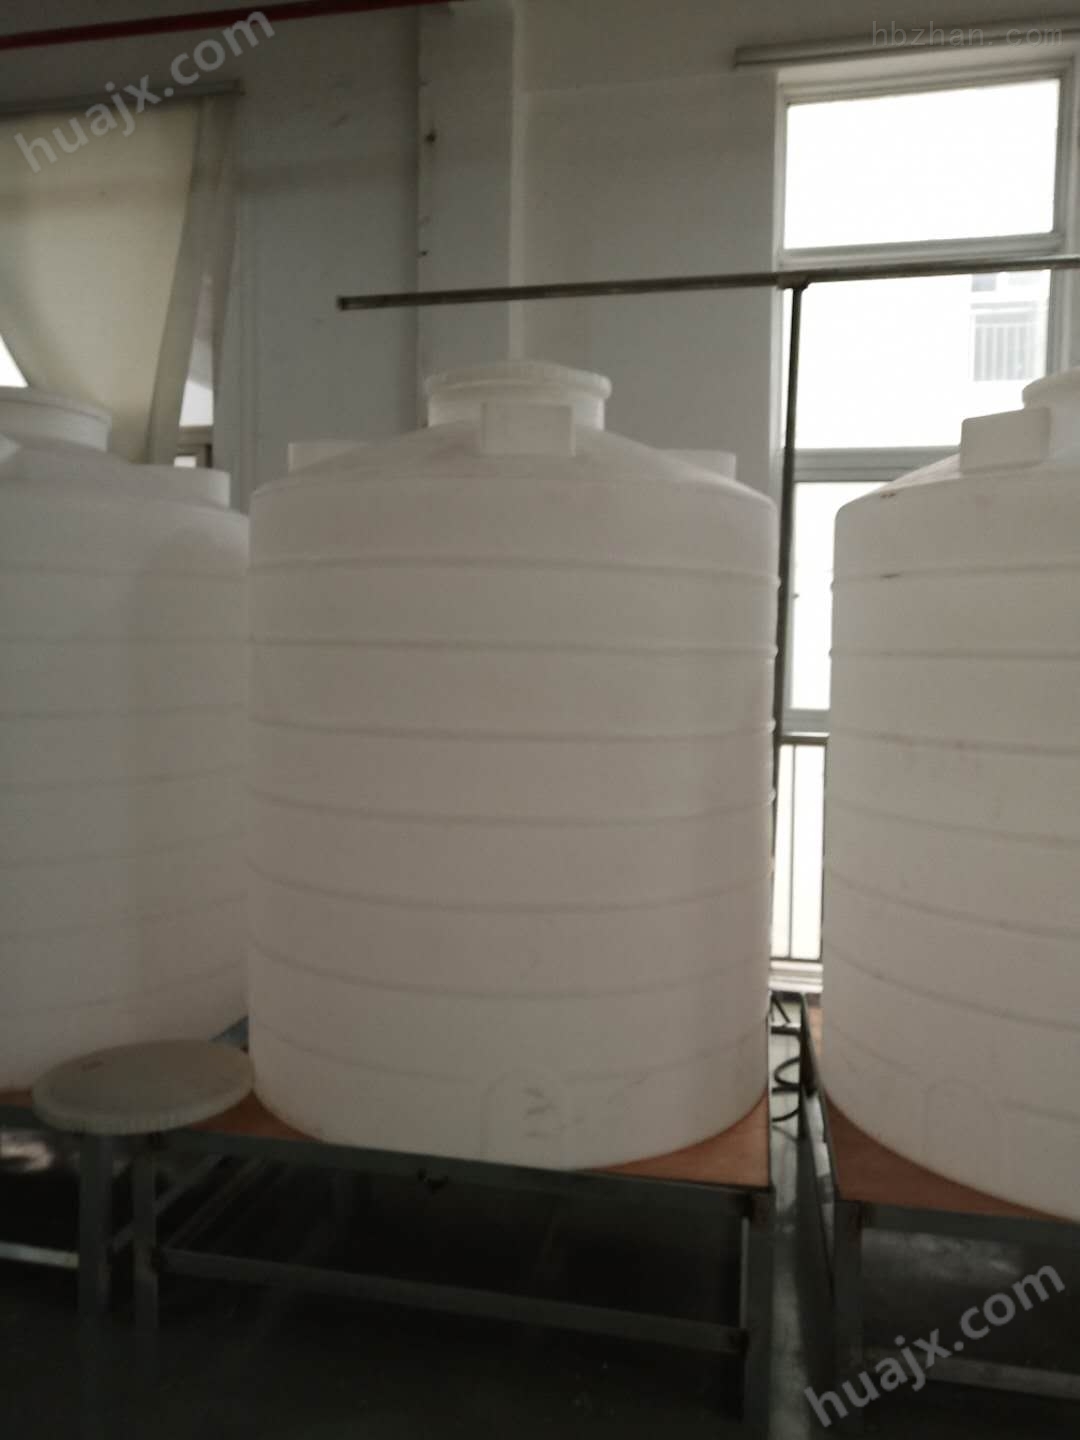 1000L塑料化工桶 1吨盐酸储罐